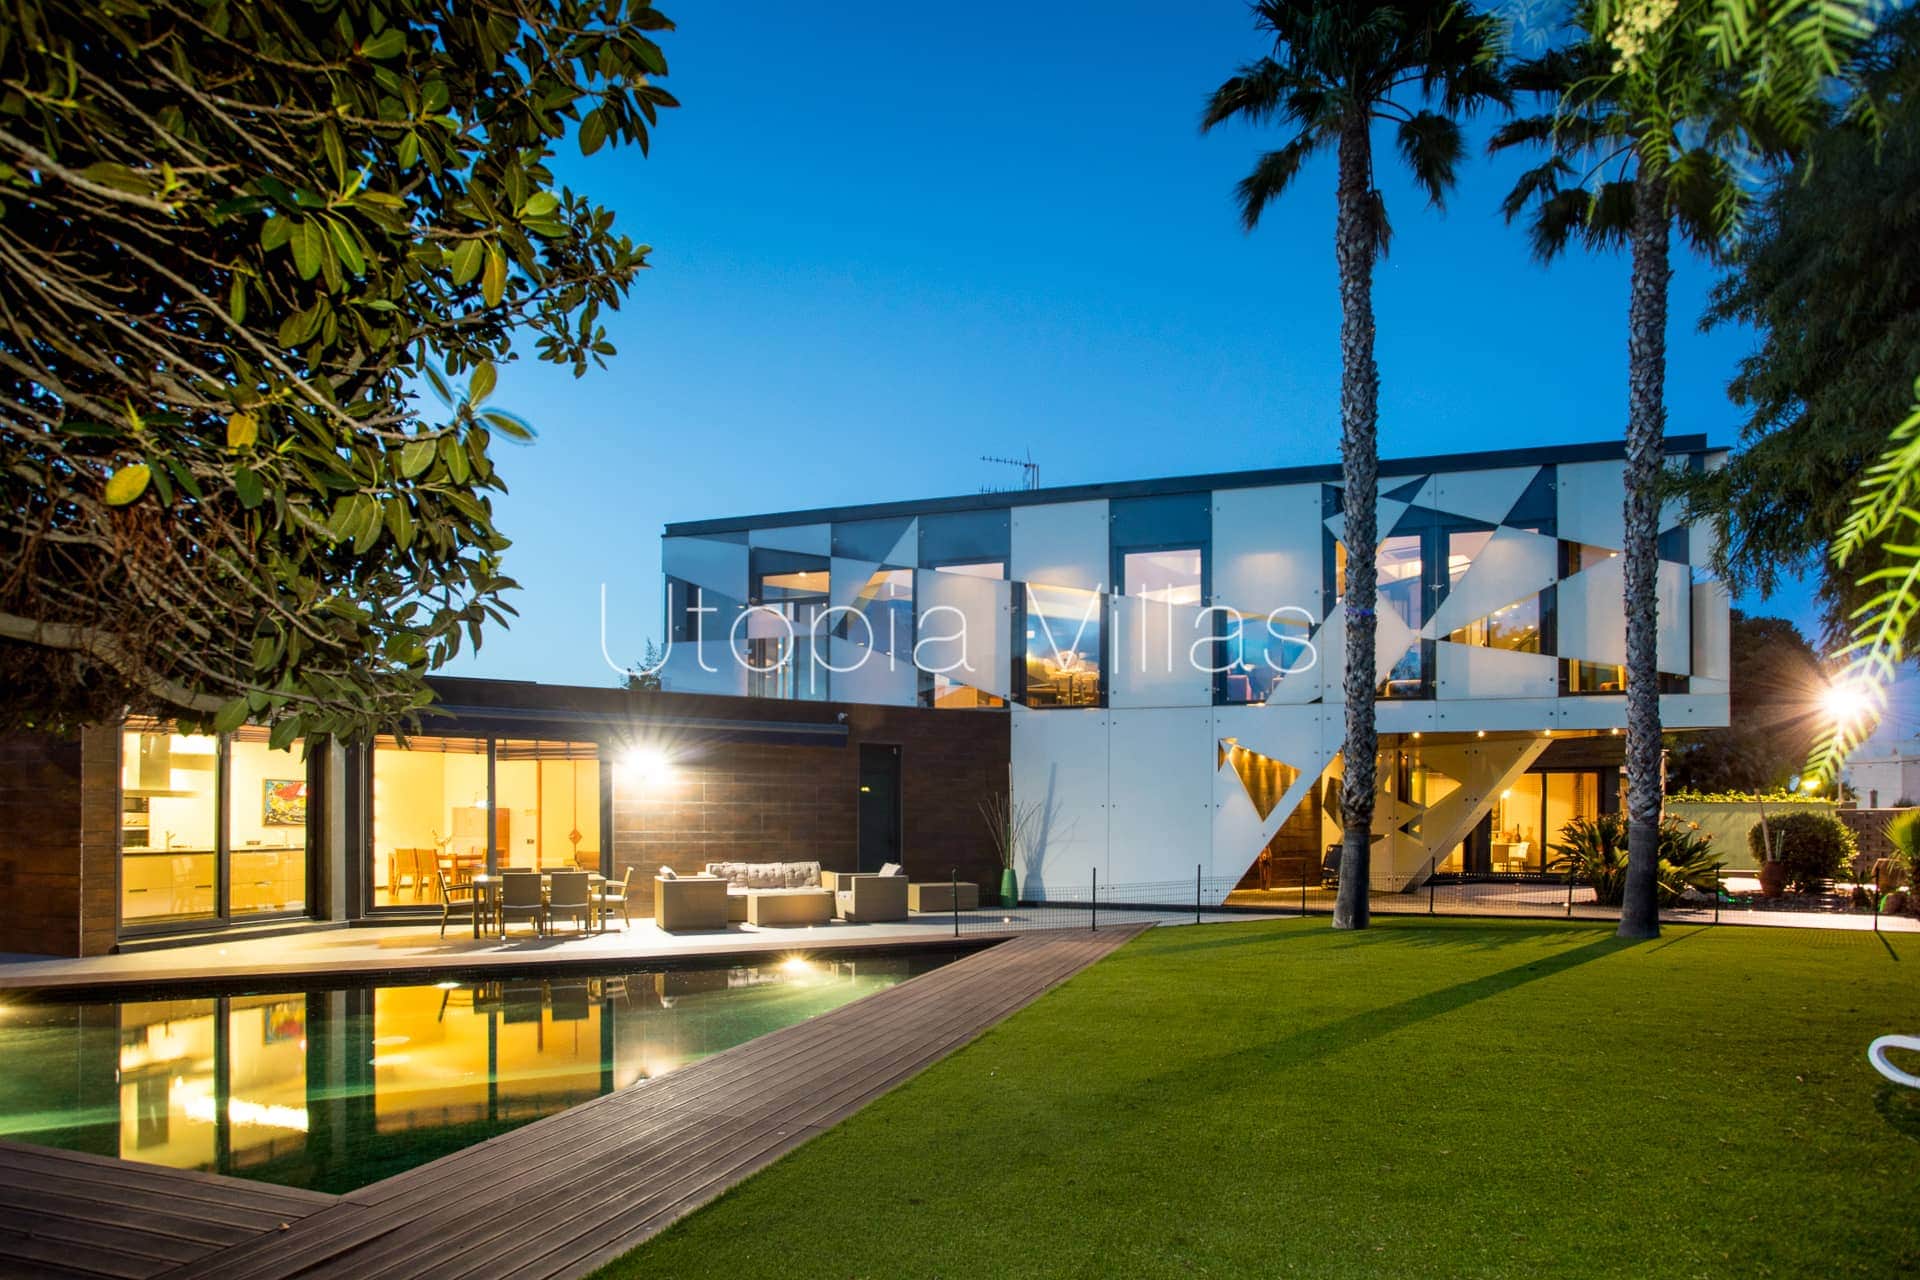 Luxury Villa Elite at night in Sitges, Barcelona